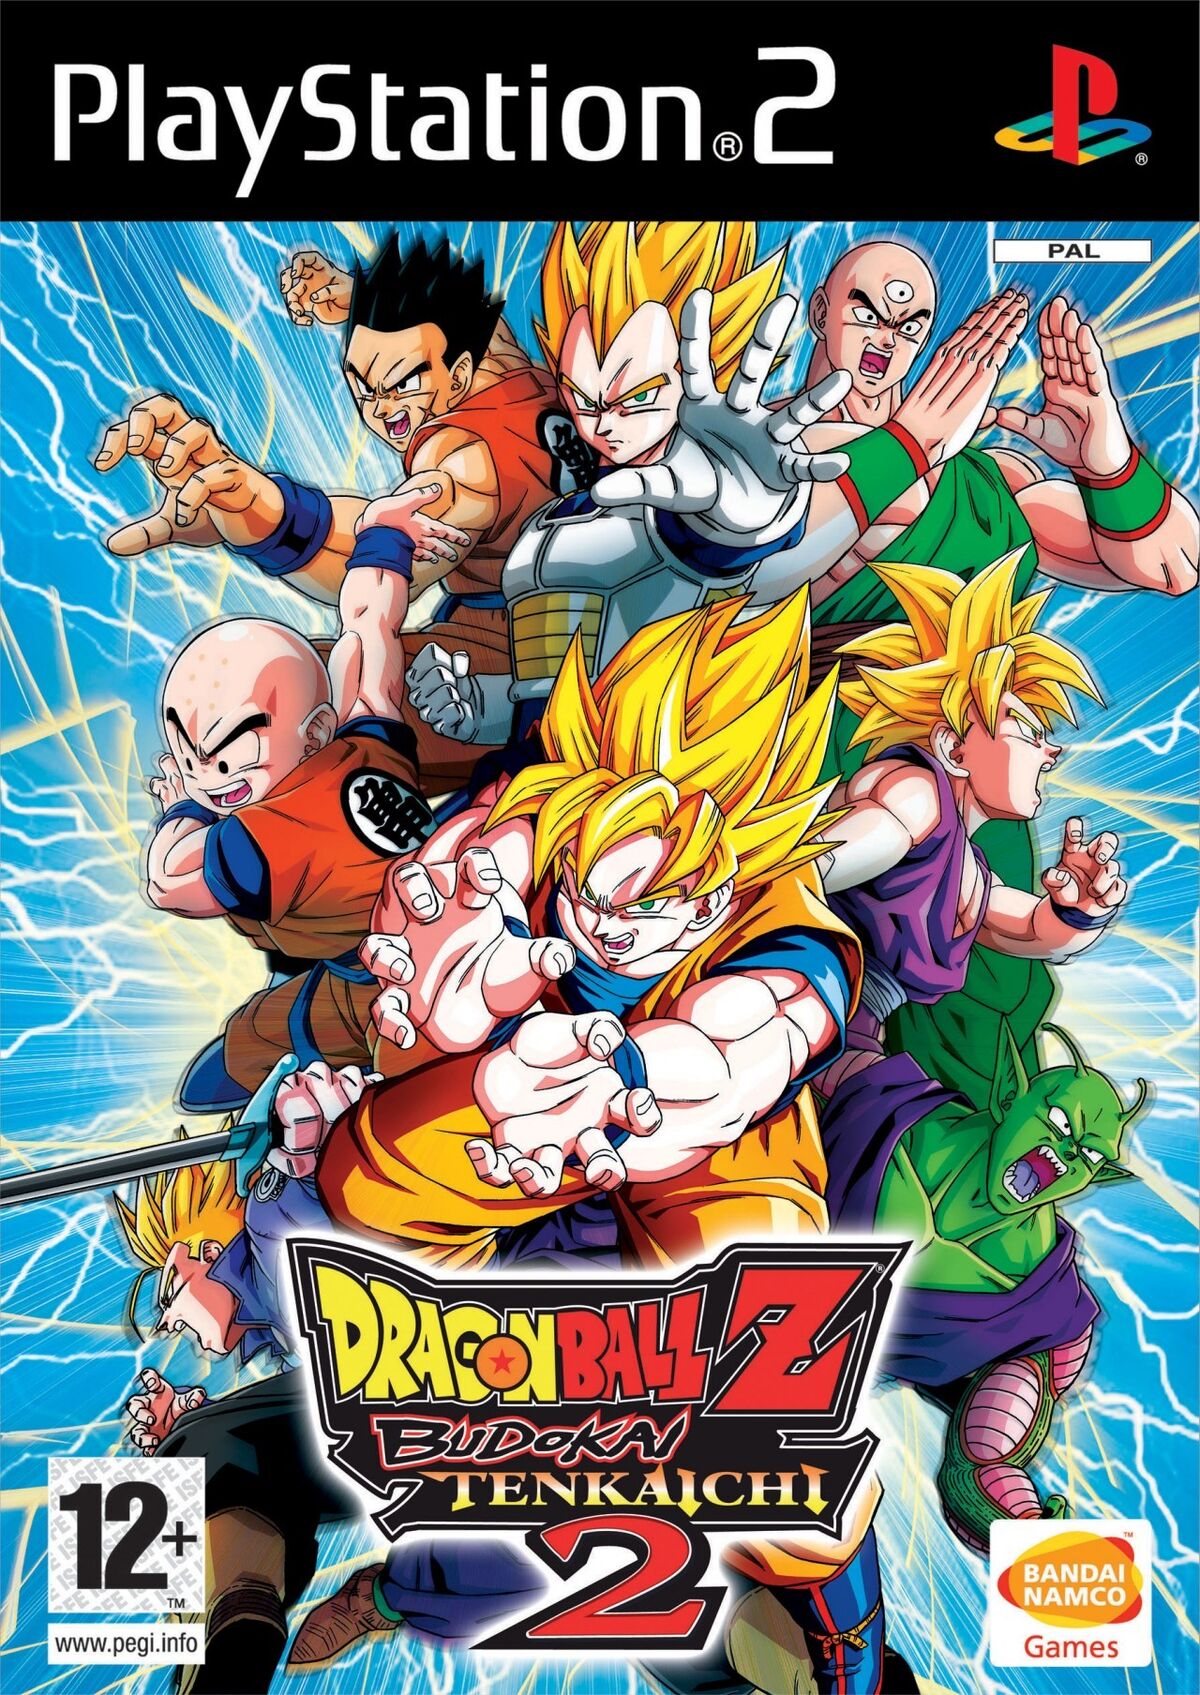 Min Gran engaño maníaco Dragon Ball Z: Budokai Tenkaichi 2 | Dragon Ball Wiki Hispano | Fandom